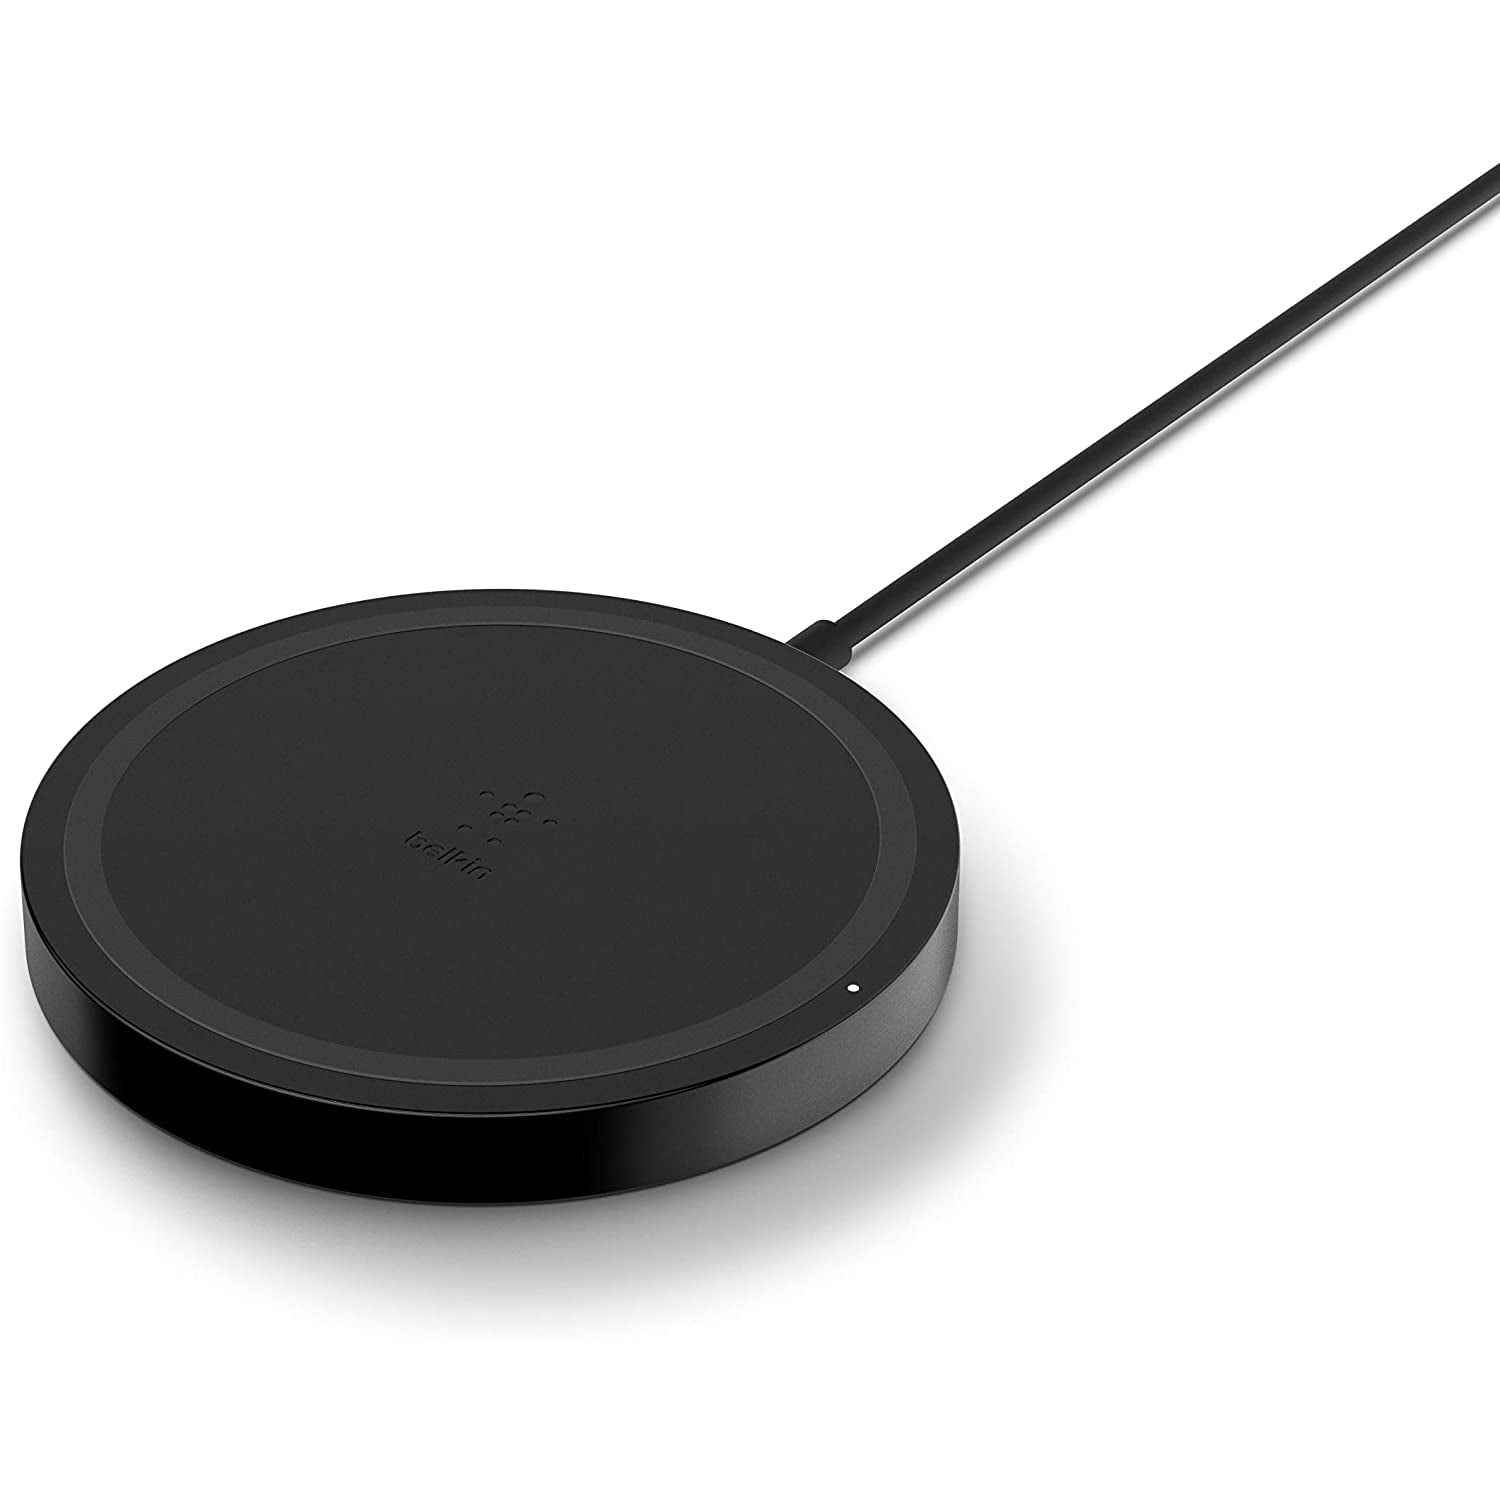 Belkin Boost Up Wireless Charging Pad 5W - Black - New